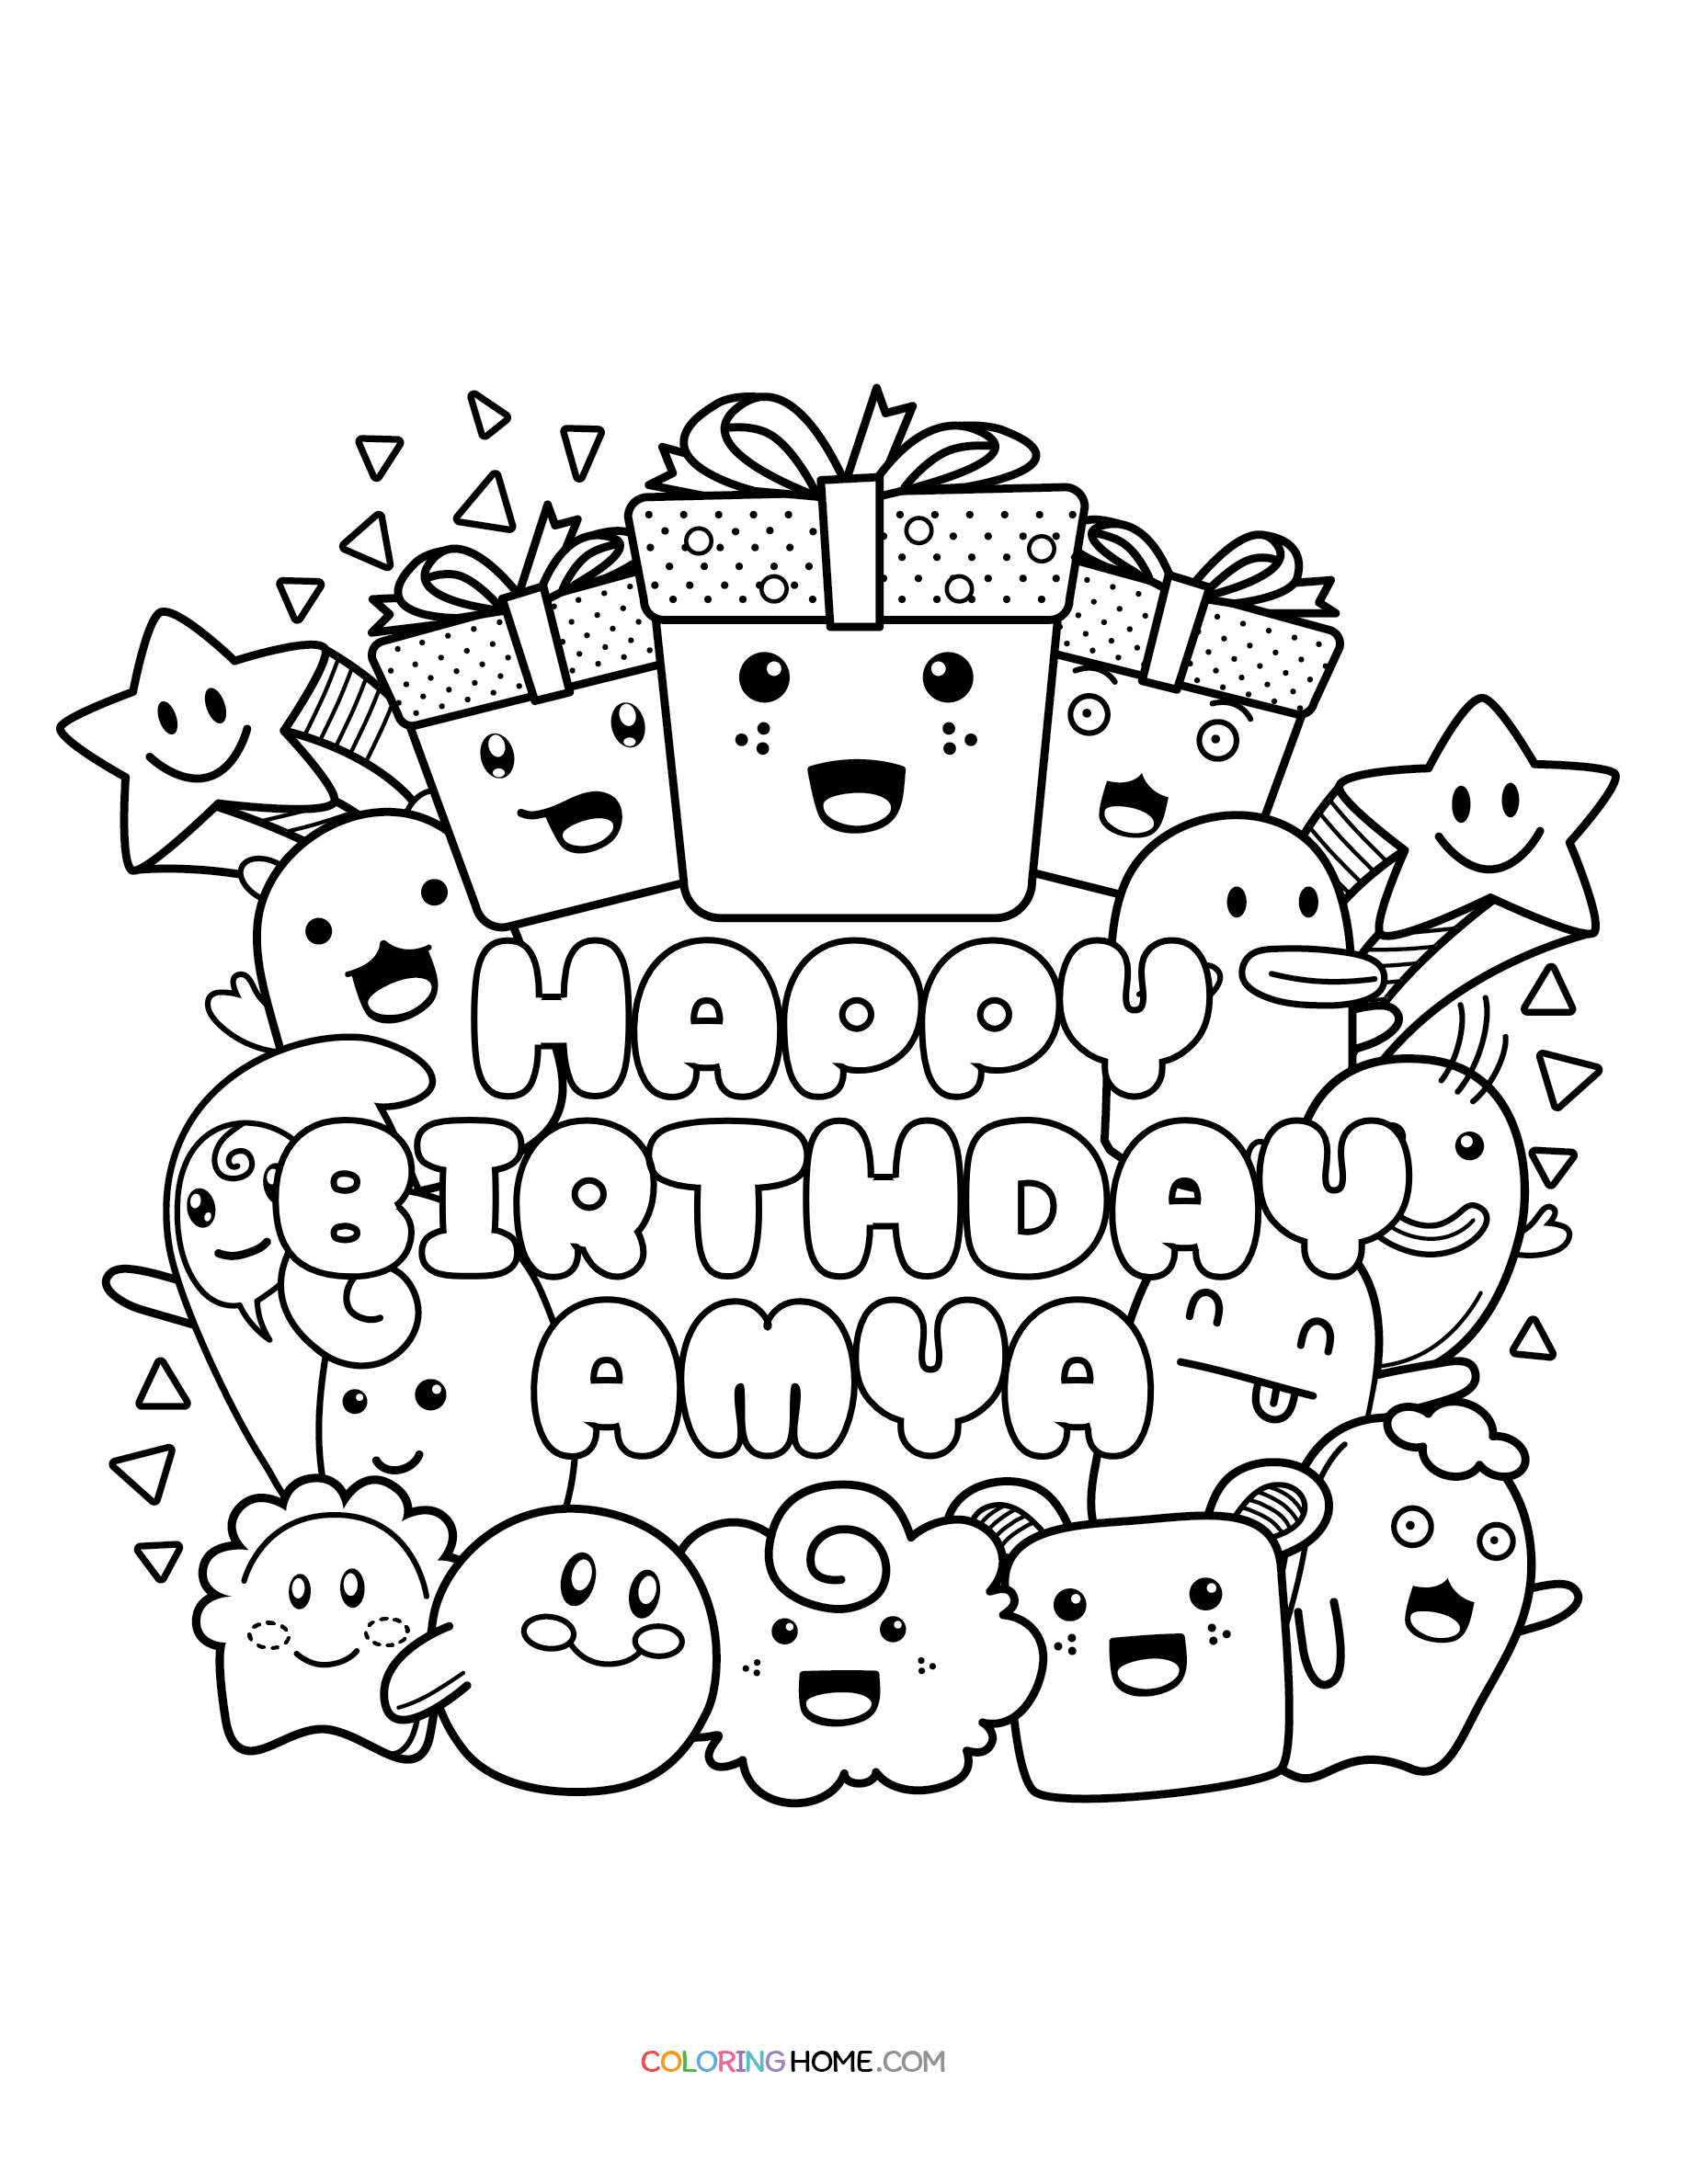 Happy Birthday Amya coloring page